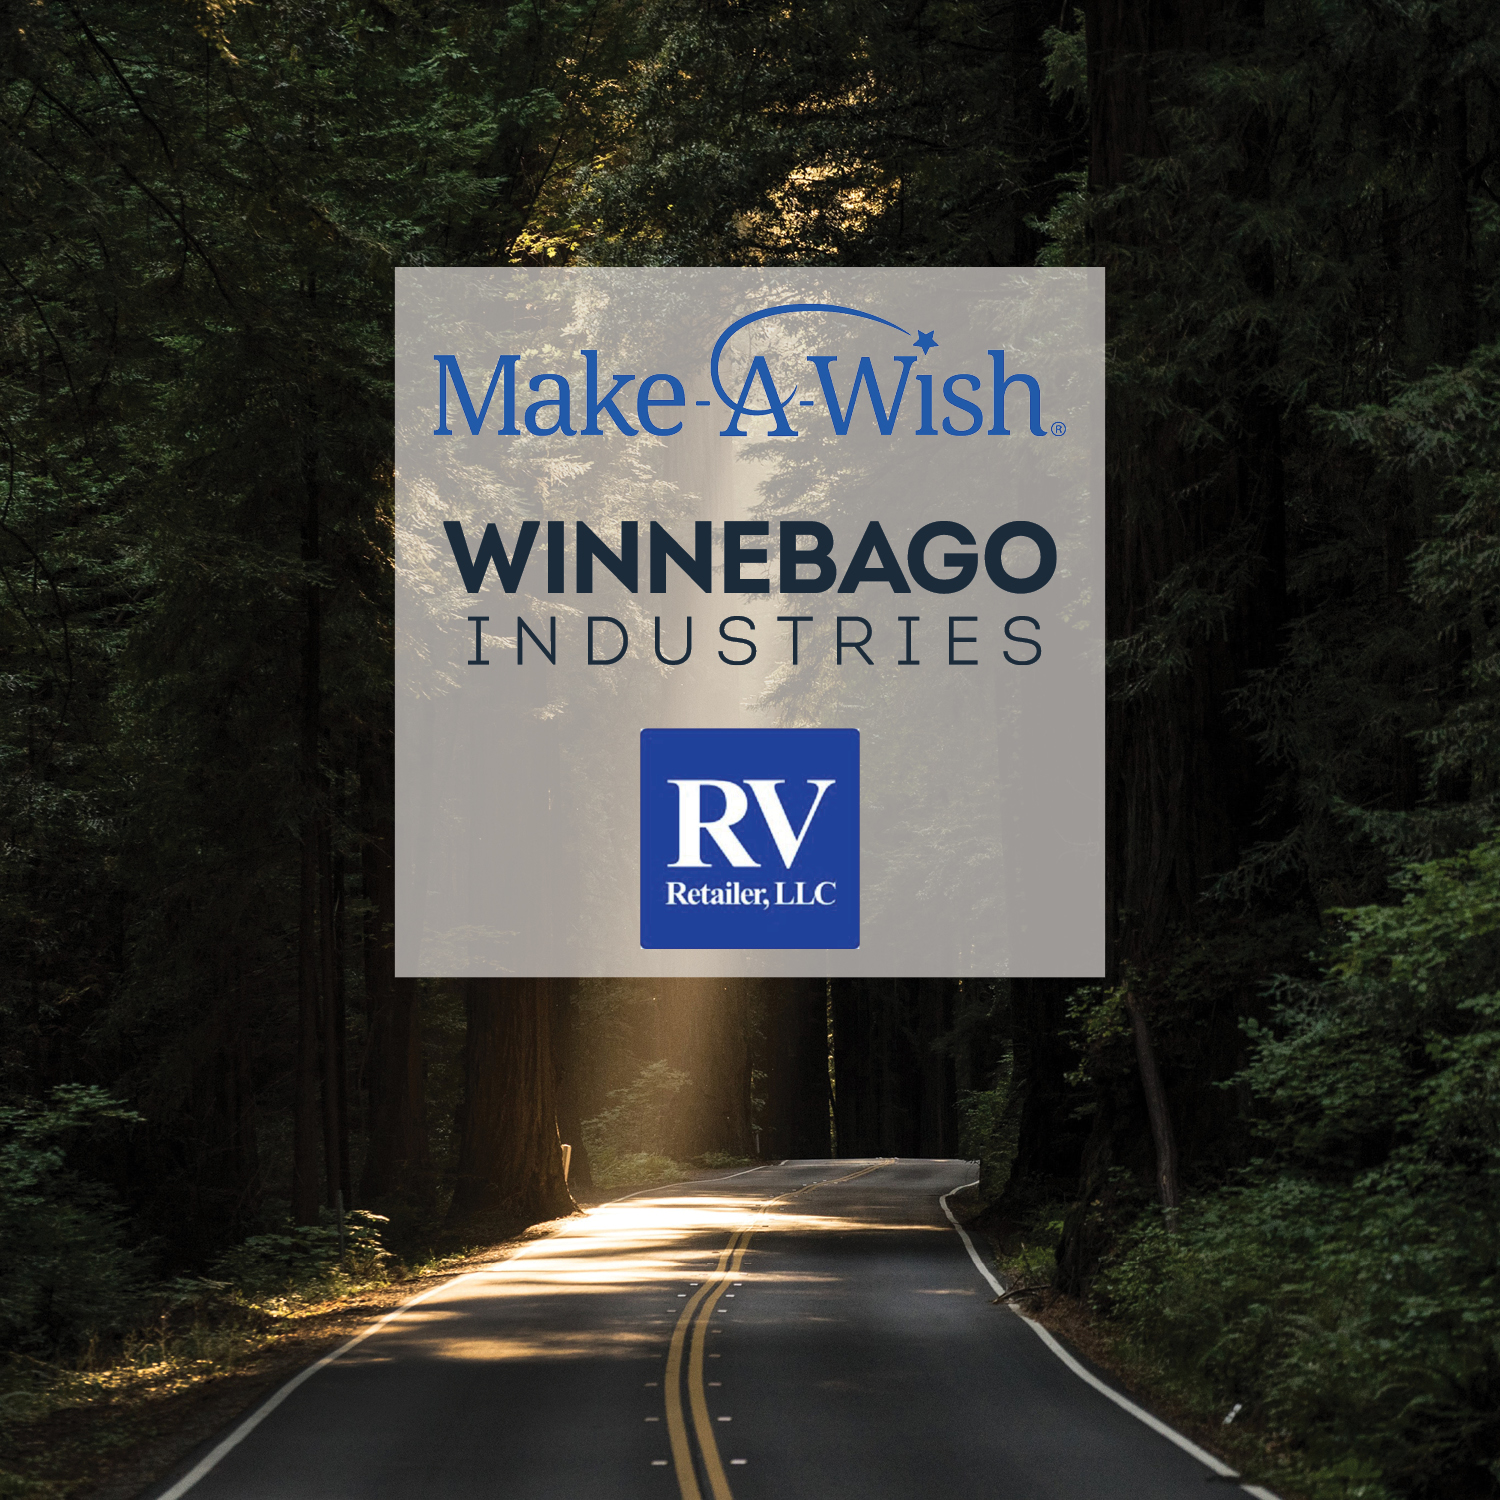 Winnebago Industries, Make-A-Wish and RV Retailer